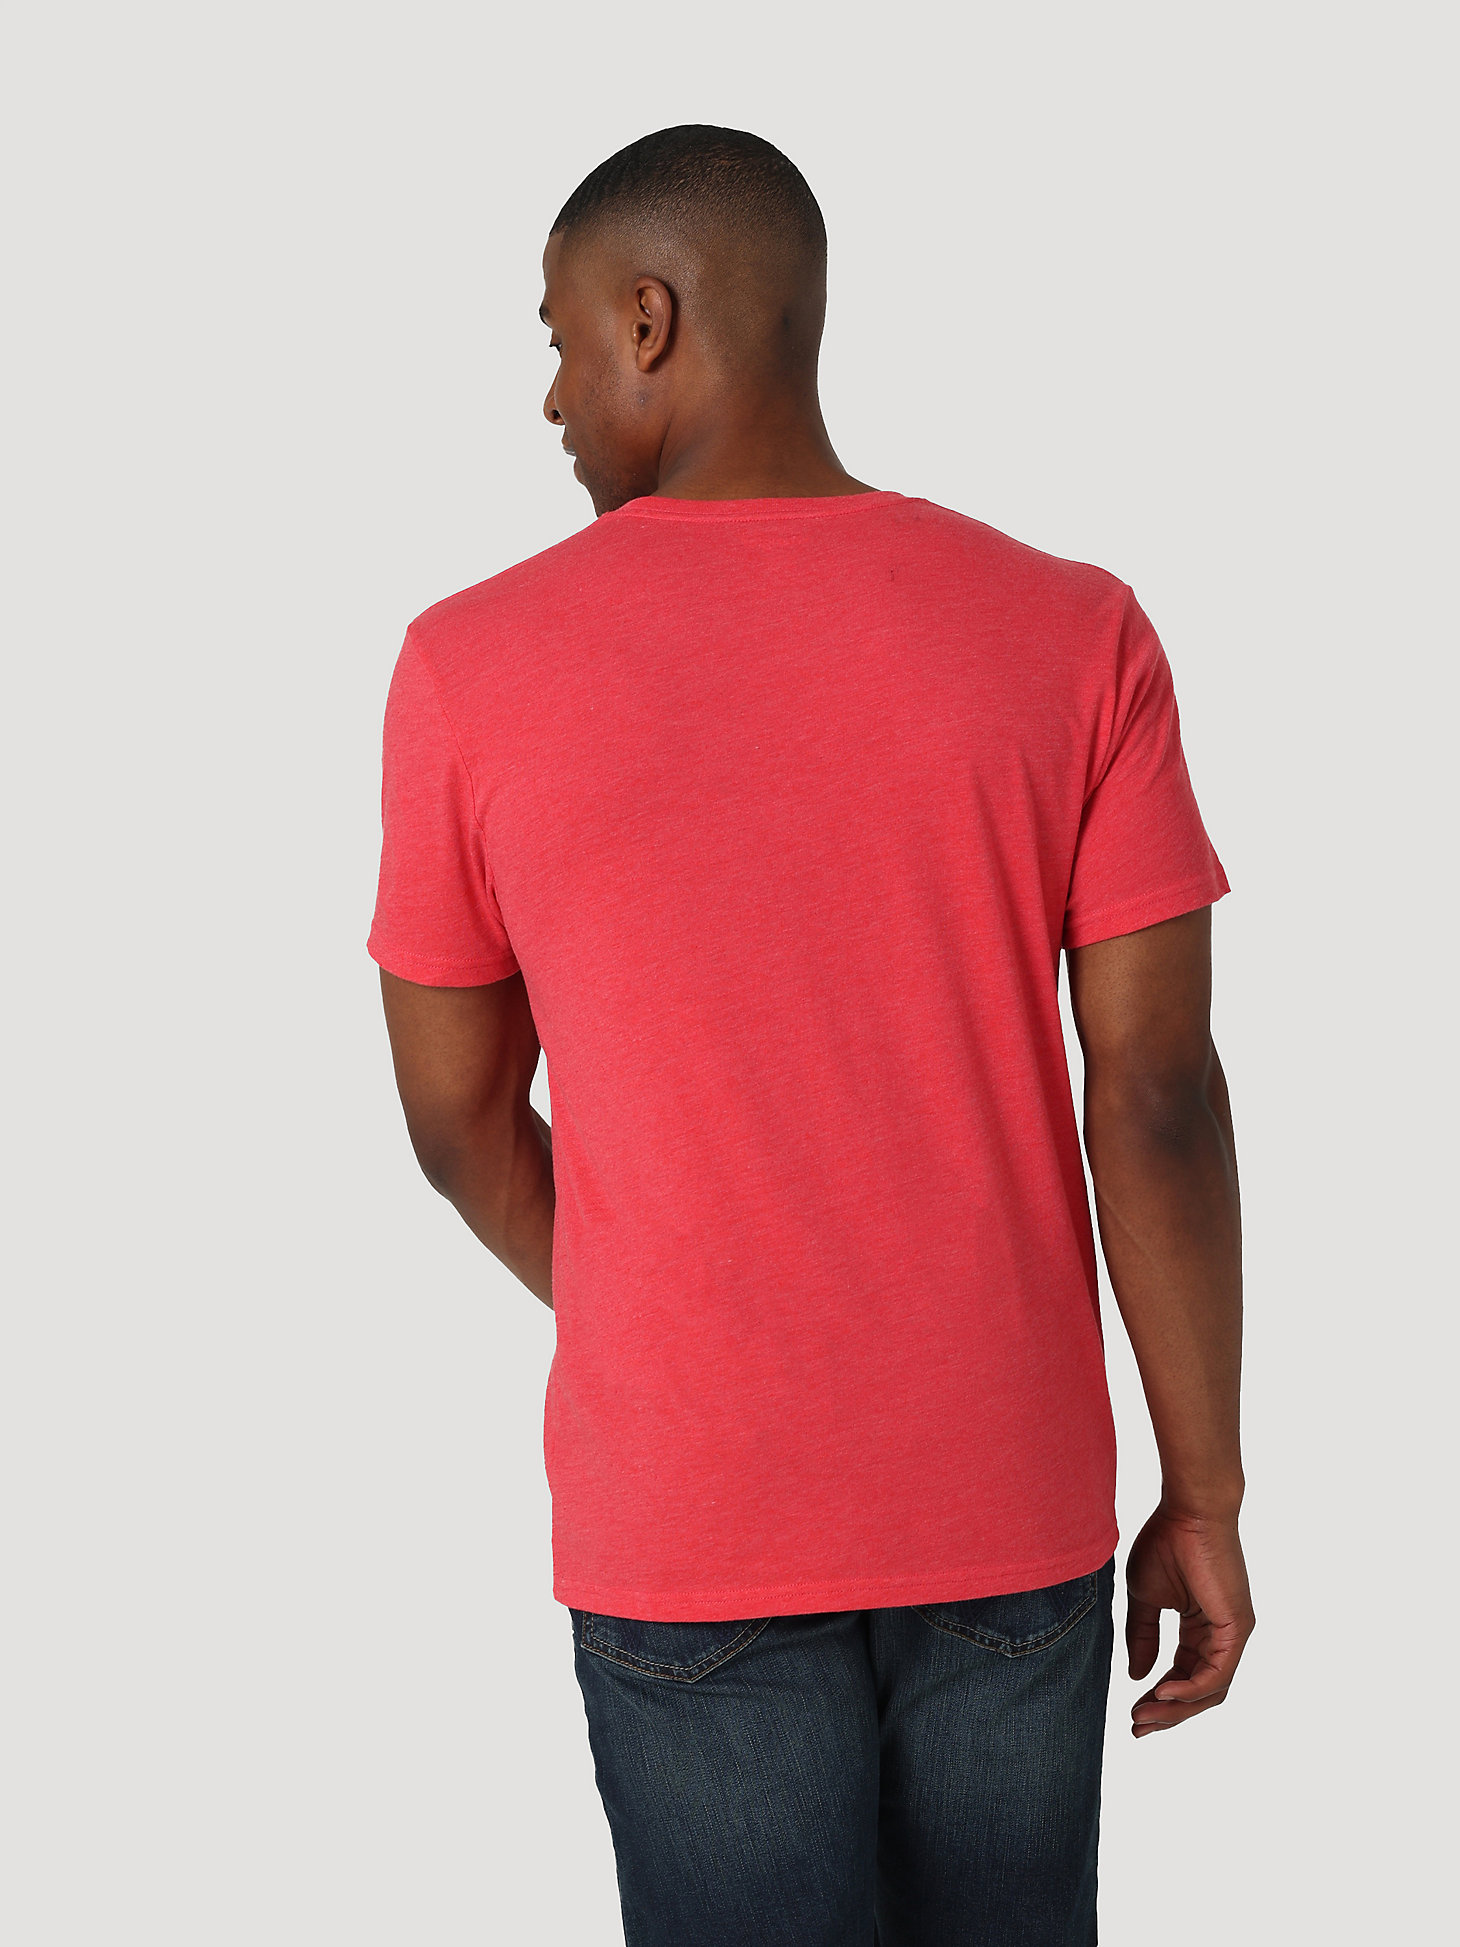 Men's Geo Wrangler Logo T-Shirt in Red Heather alternative view 1